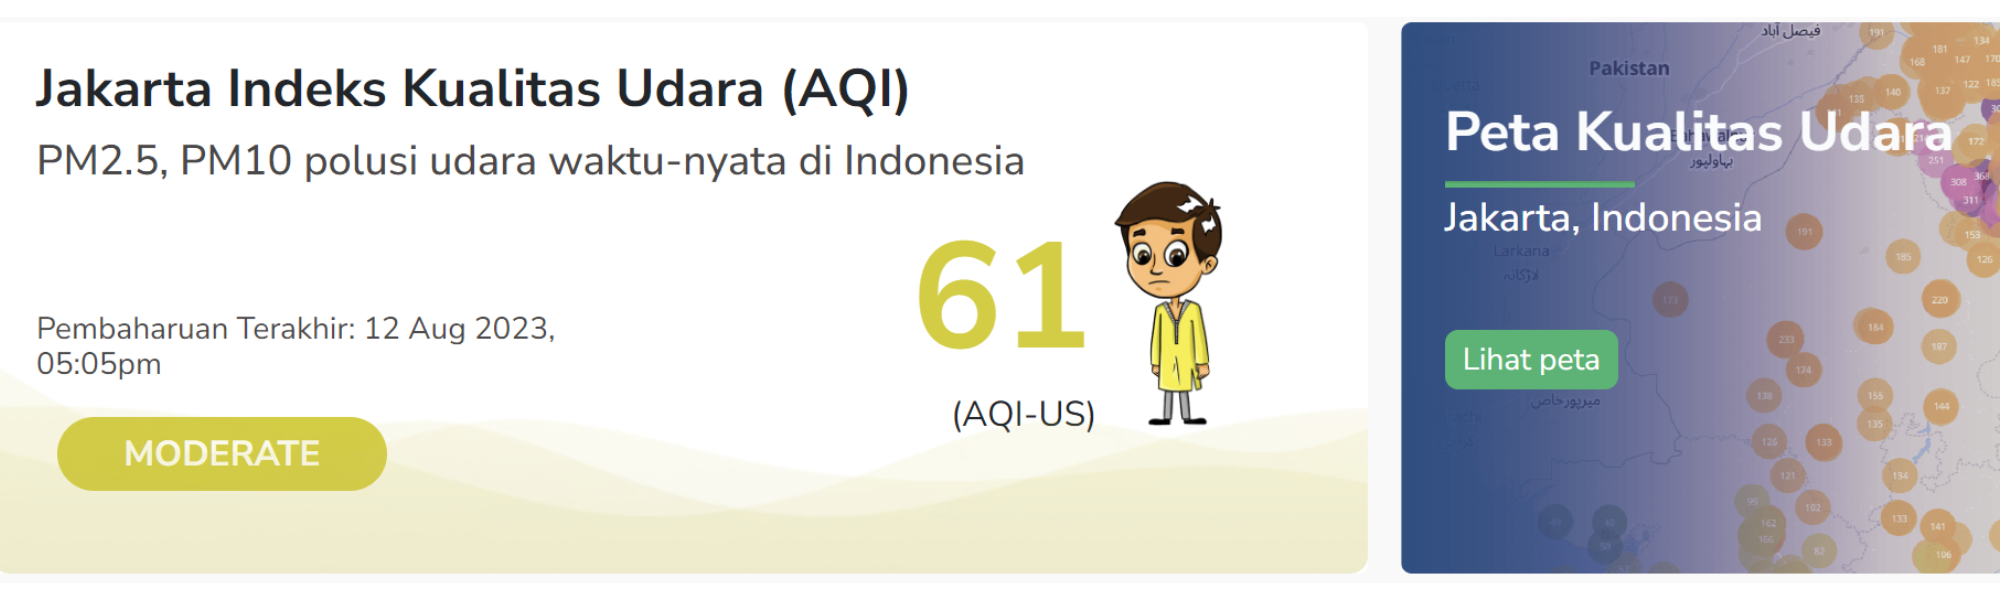 Jakarta Indeks Kualitas Udara | Sumber : https://www.aqi.in/id/dashboard/indonesia/jakarta